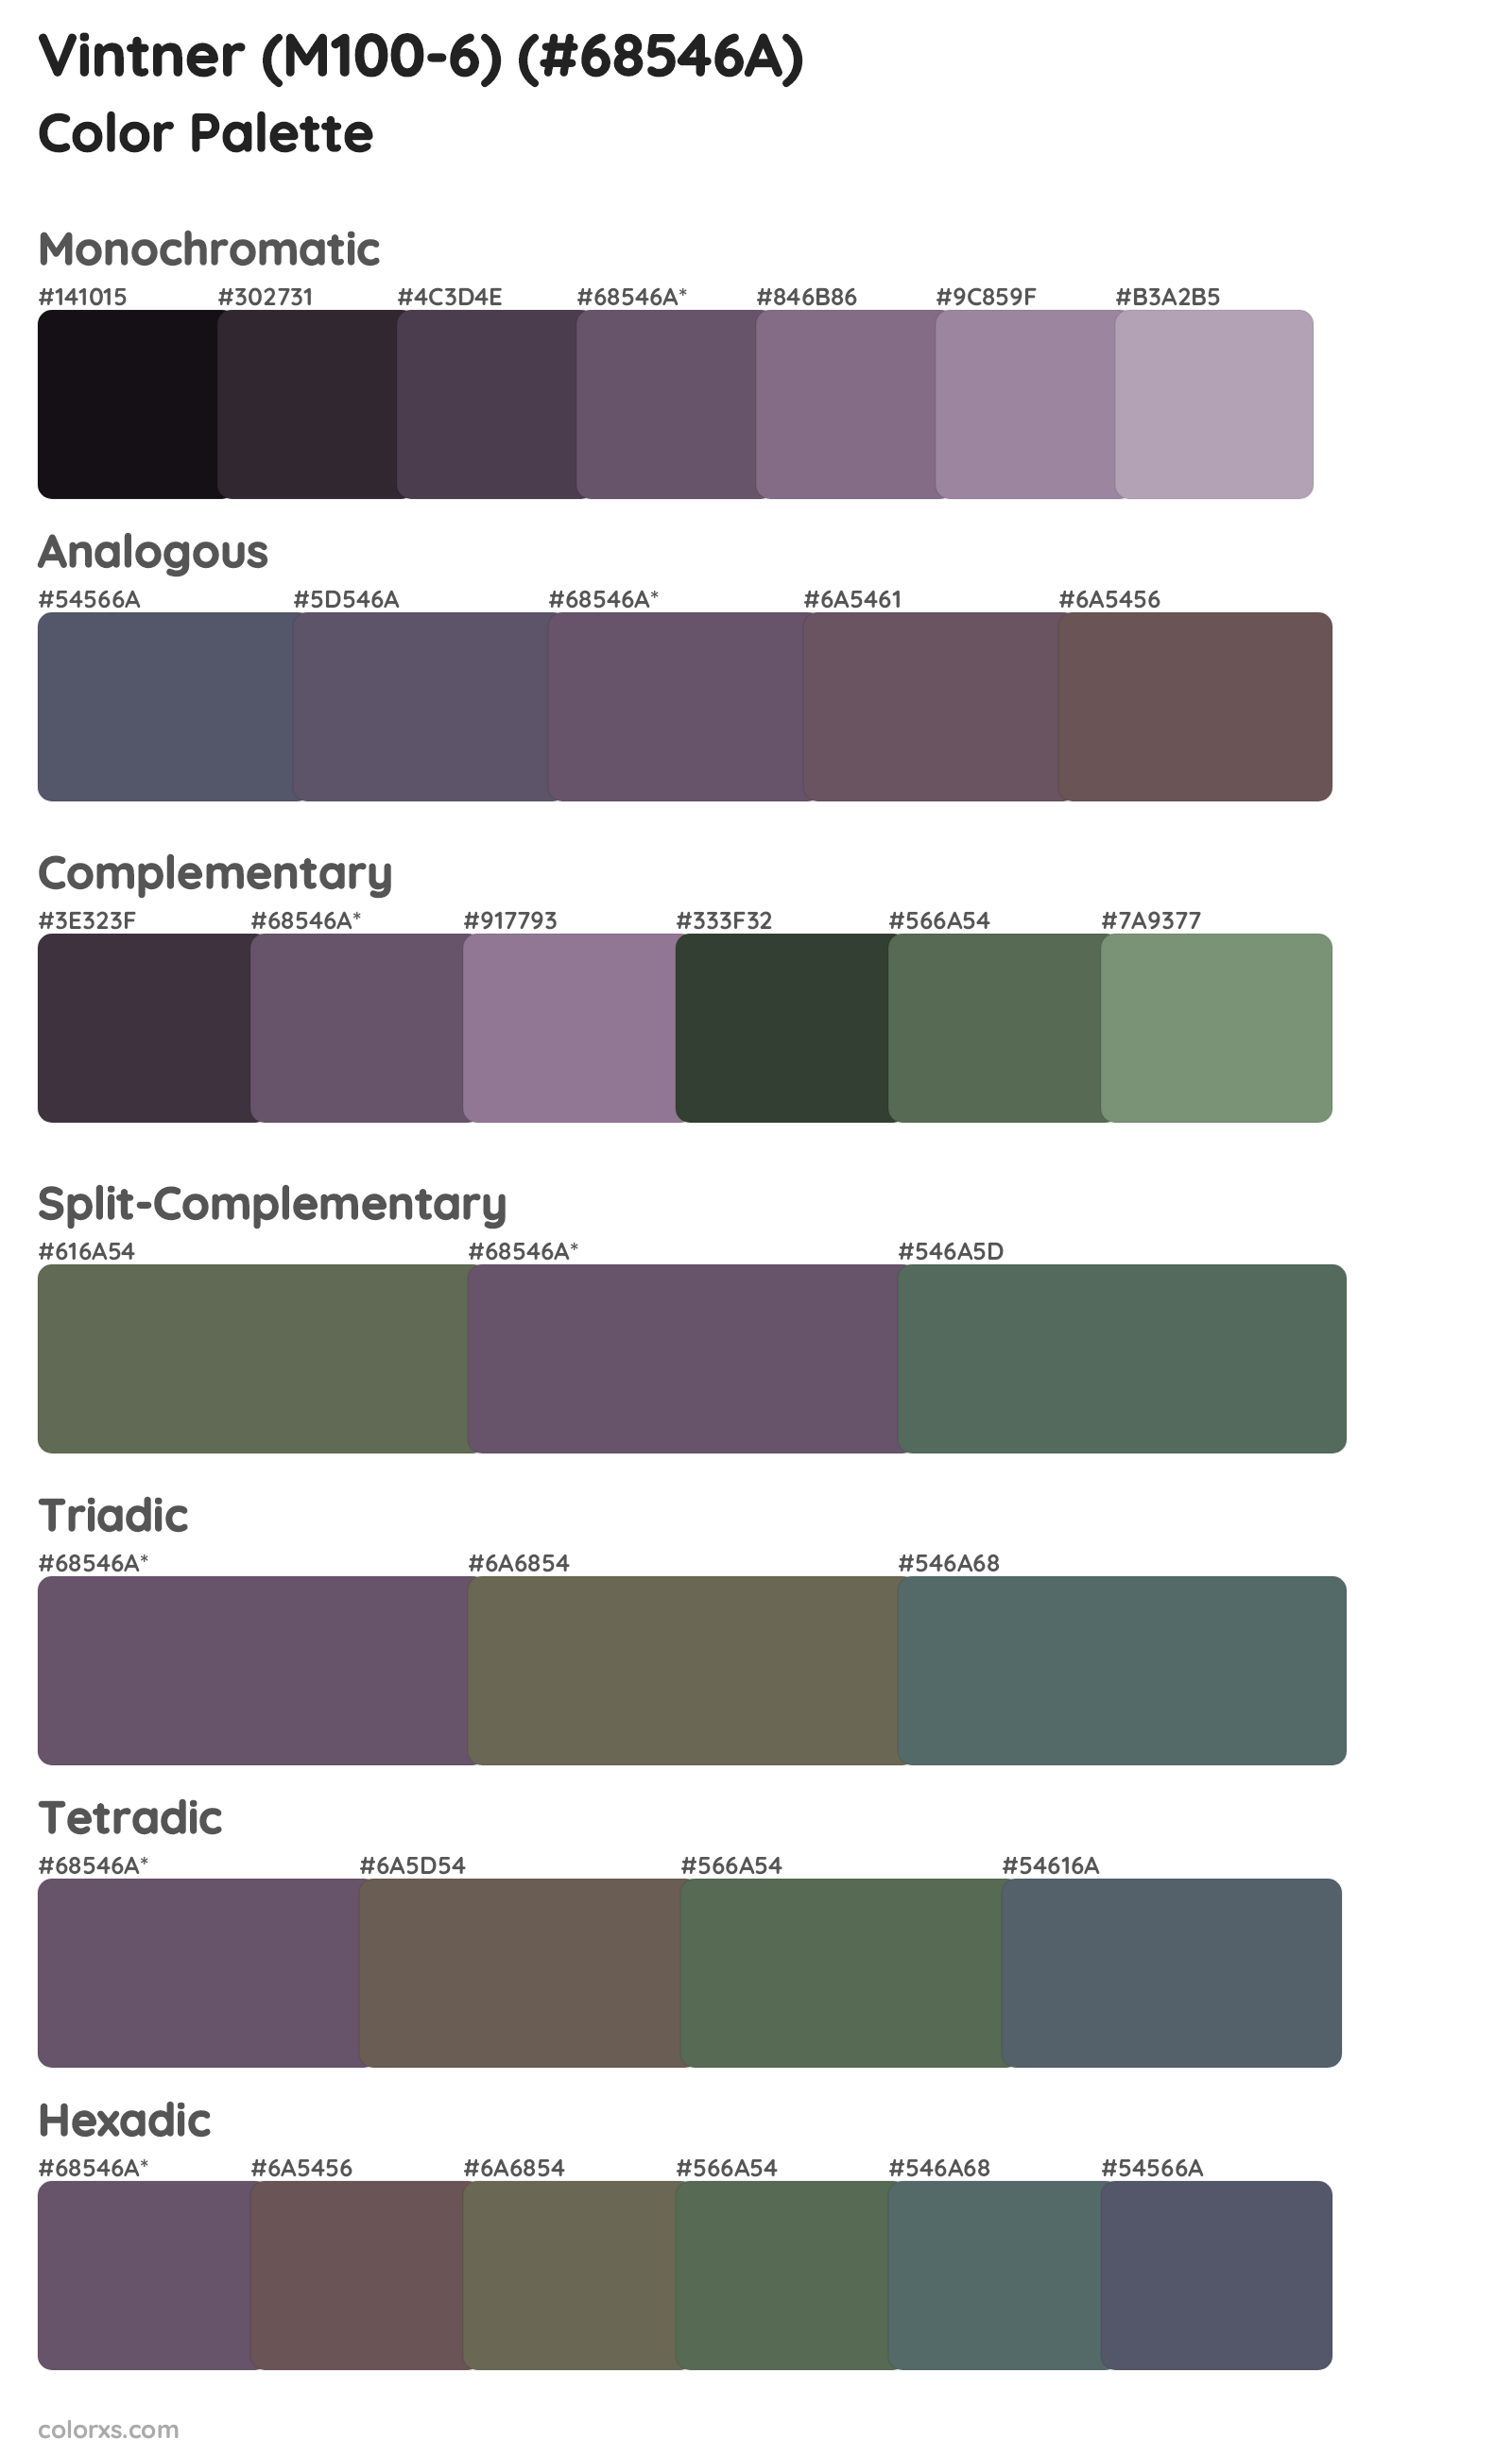 Vintner (M100-6) Color Scheme Palettes